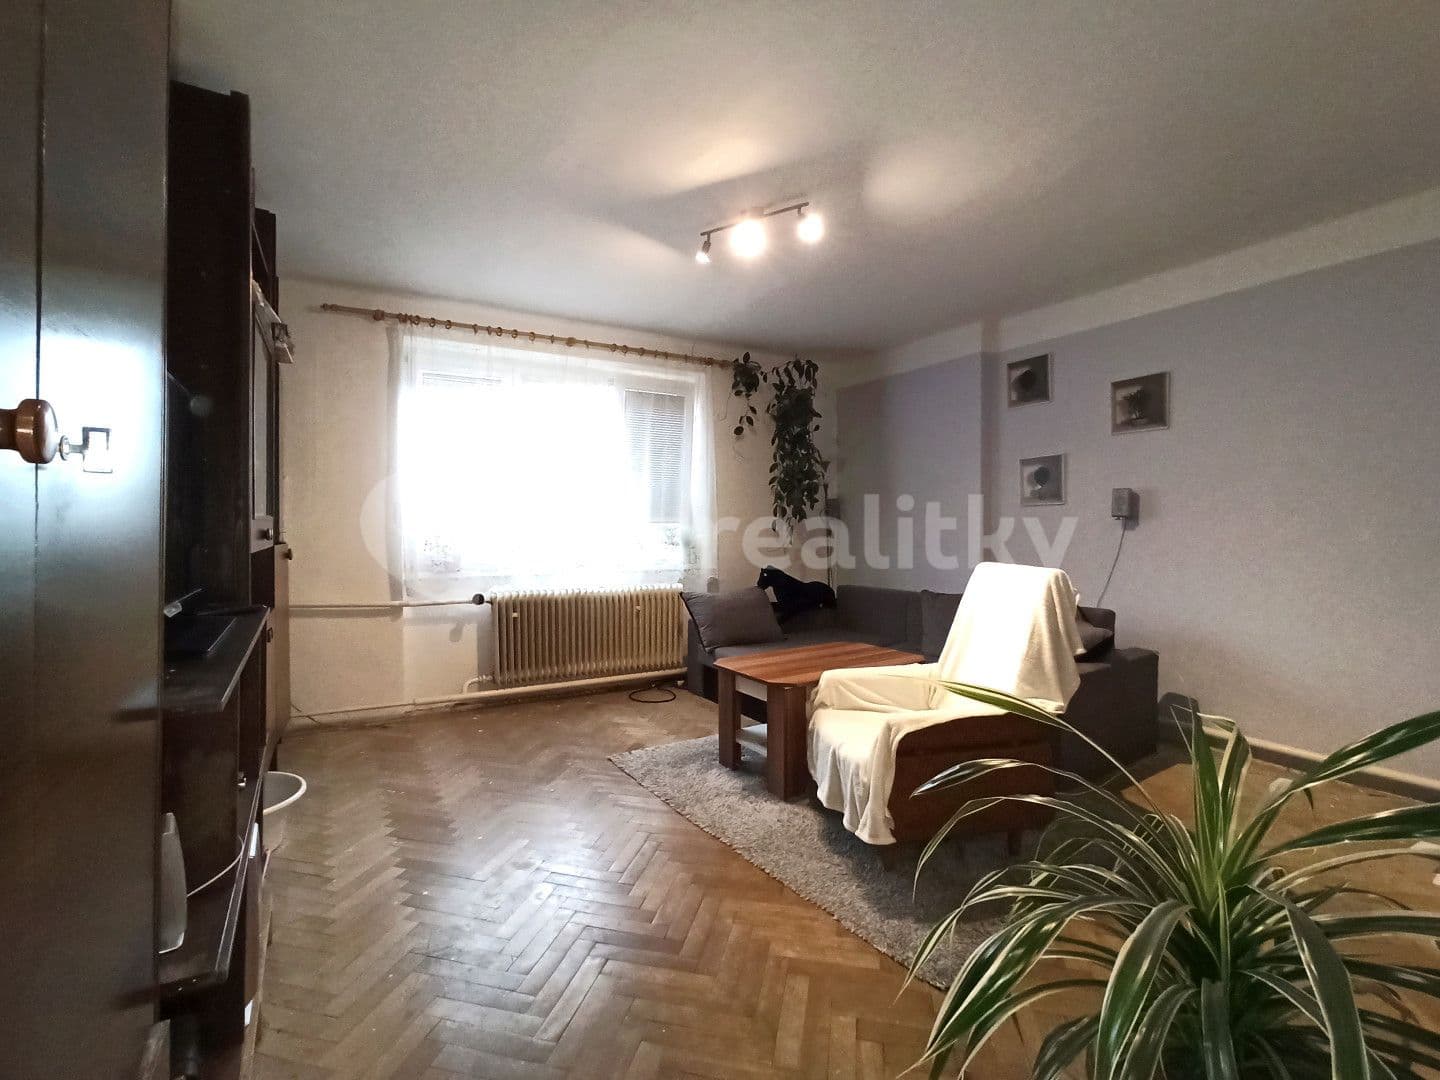 Predaj bytu 3-izbový 64 m², Horní Loděnice, Olomoucký kraj